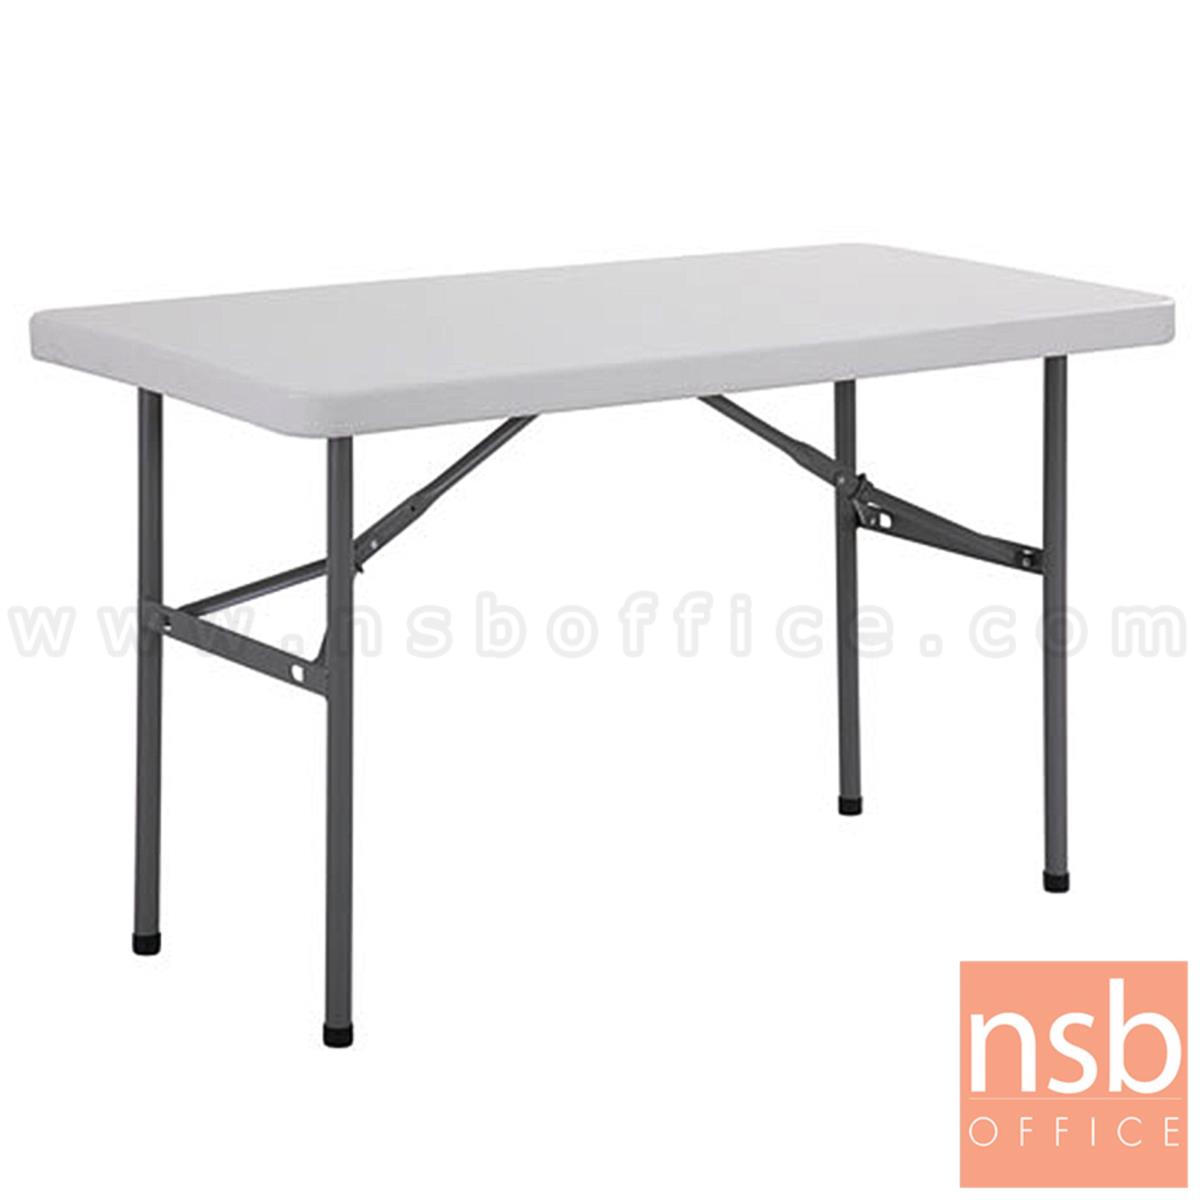 A19A021:โต๊ะพับหน้าพลาสติก รุ่น Colossal (โคลอซซอล) ขนาด 122.2W, 150W, 180W cm.  ขาอีพ็อกซี่เกล็ดเงิน